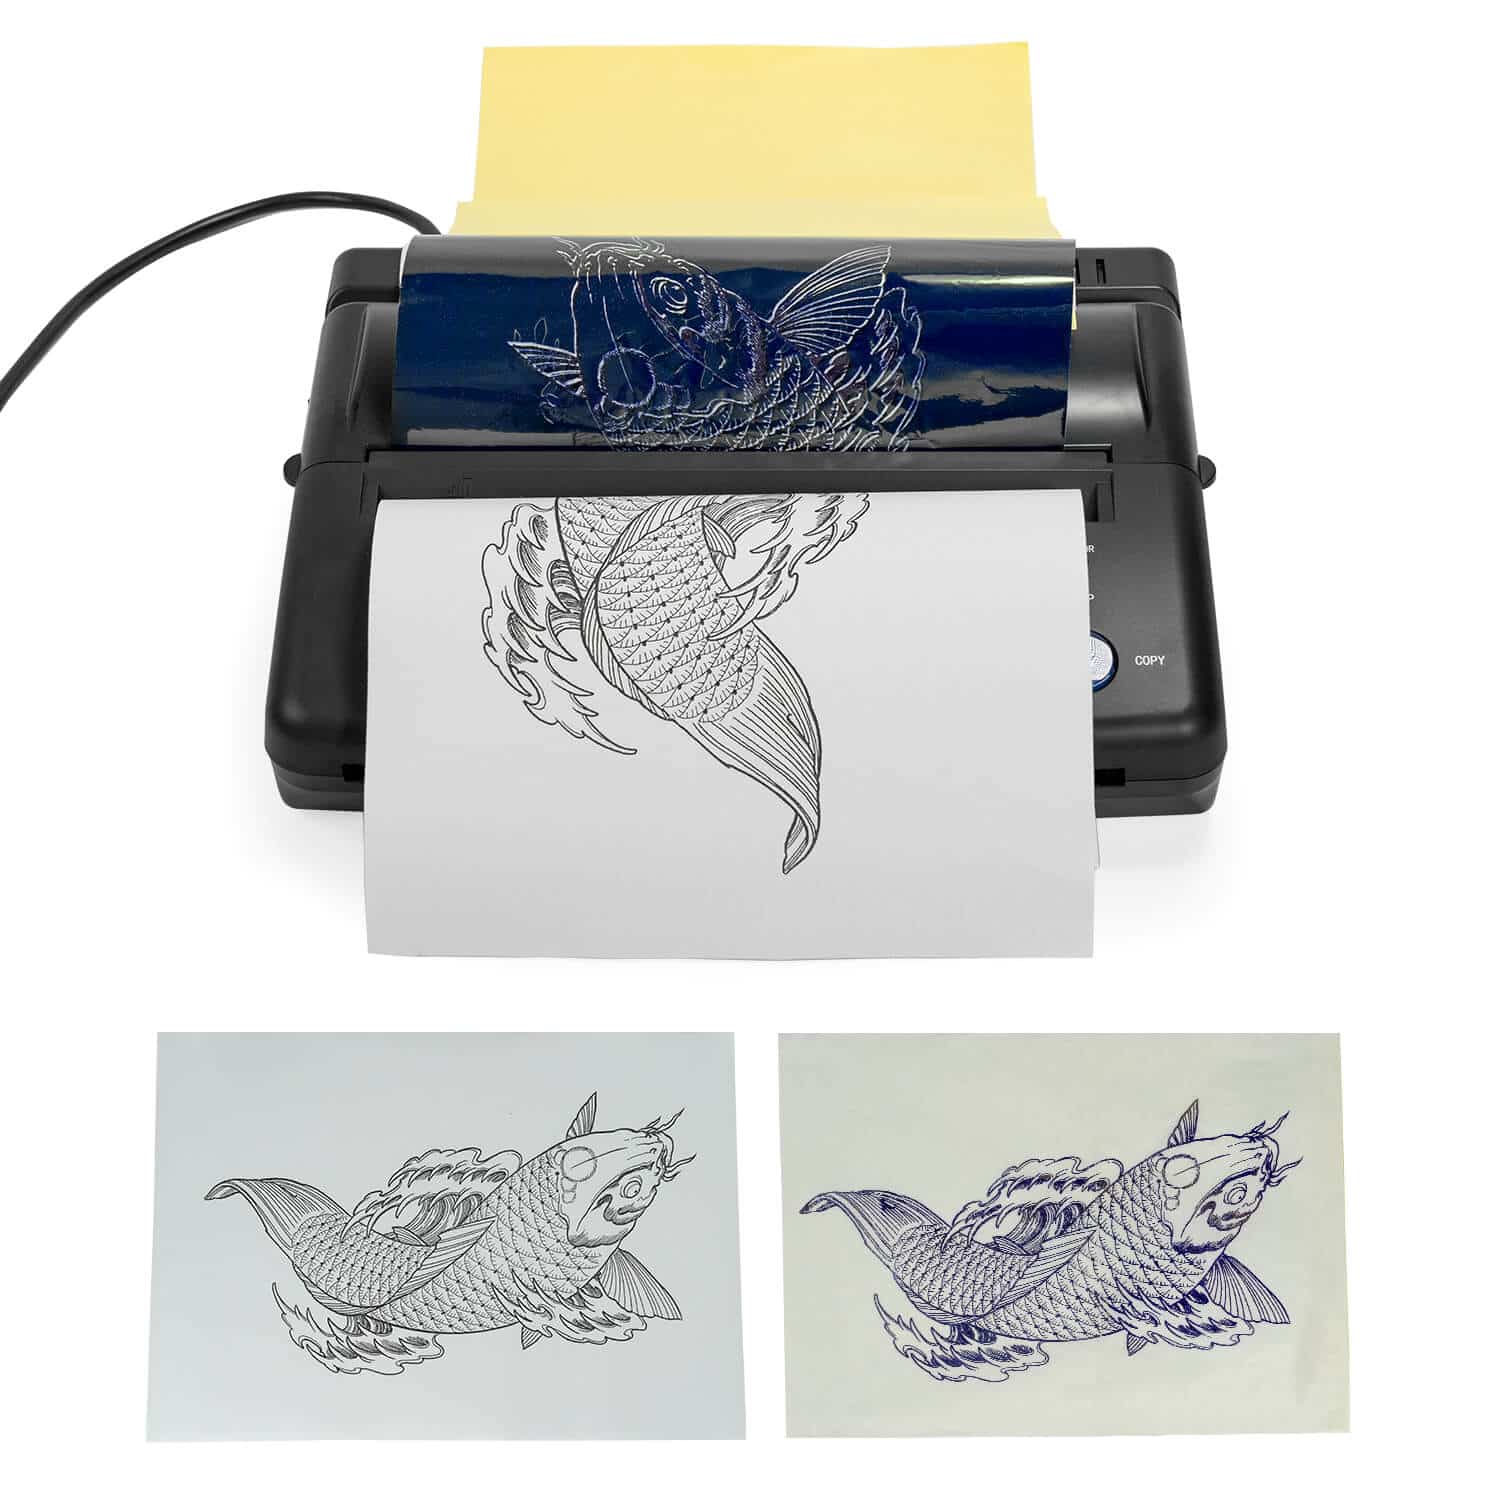 MHT-Portable Wireless Tattoo Printer Transfer Stencil Machine Thermal Tattoo  Printer Copier Printer tattoo transfer printer tatt - AliExpress